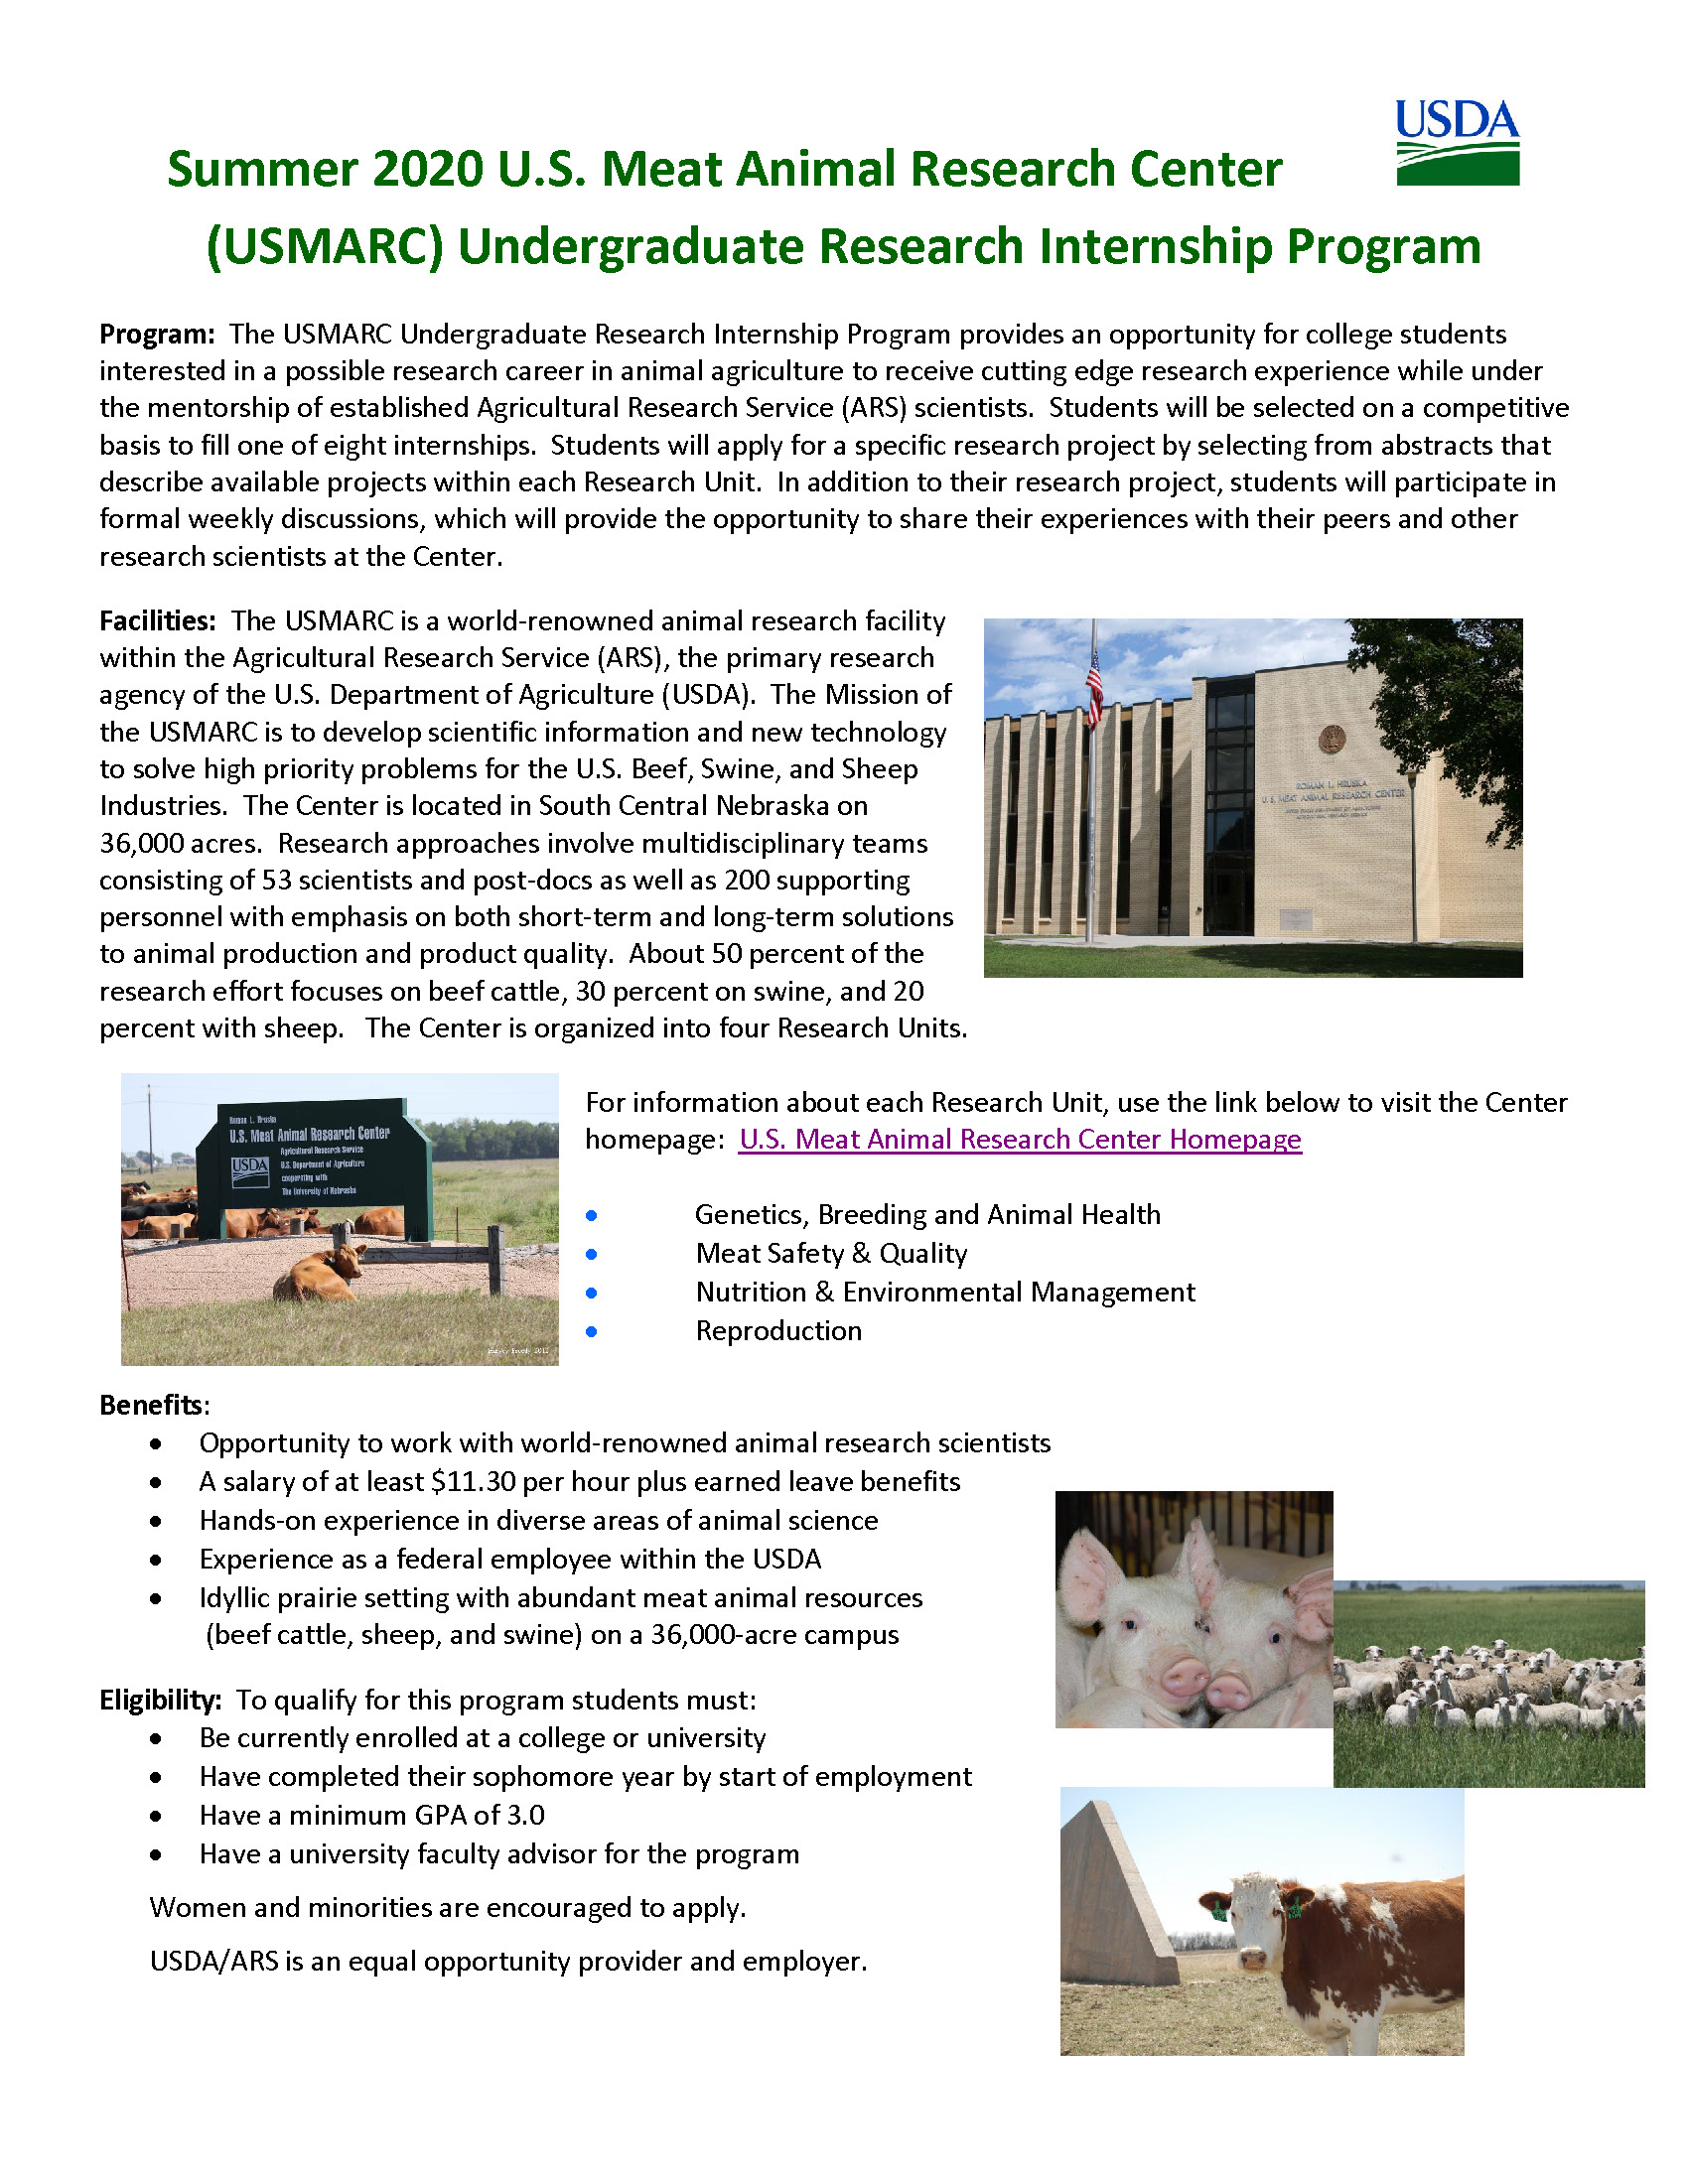 U.S. Meat Animal Research Center 2020 Summer Research Internship Program